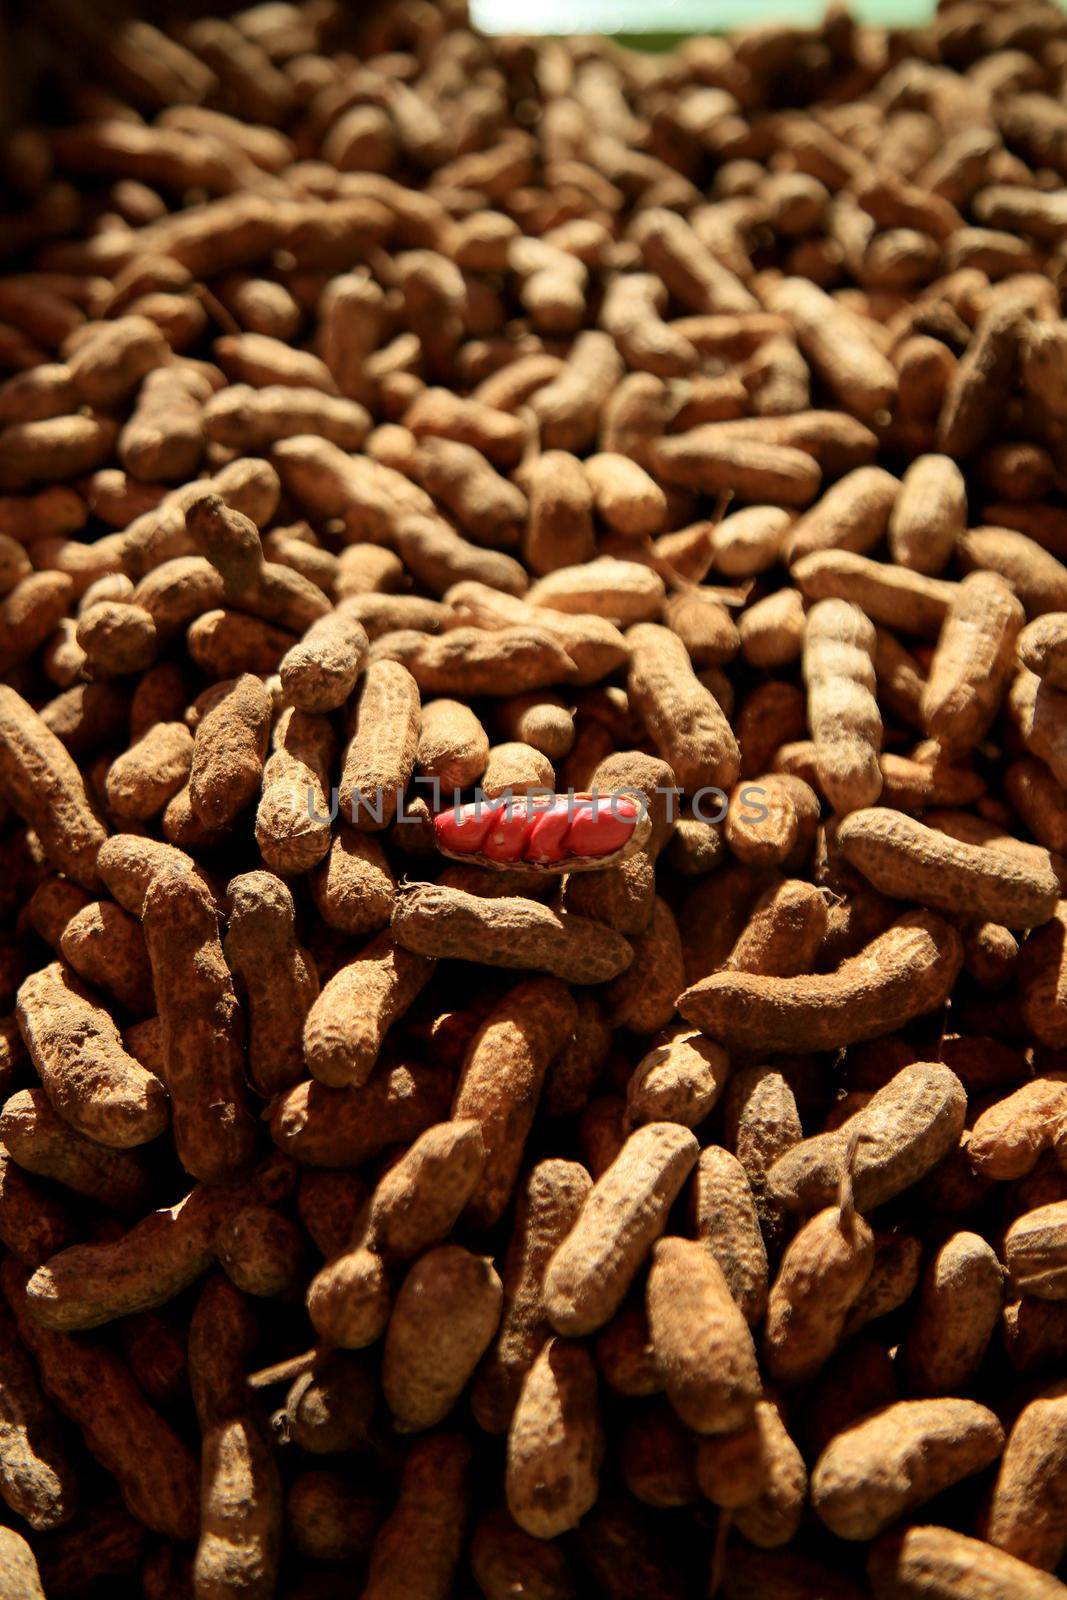 salvador, bahia, brazil - june 18, 2021: Peanut harvest in Salvador city.


